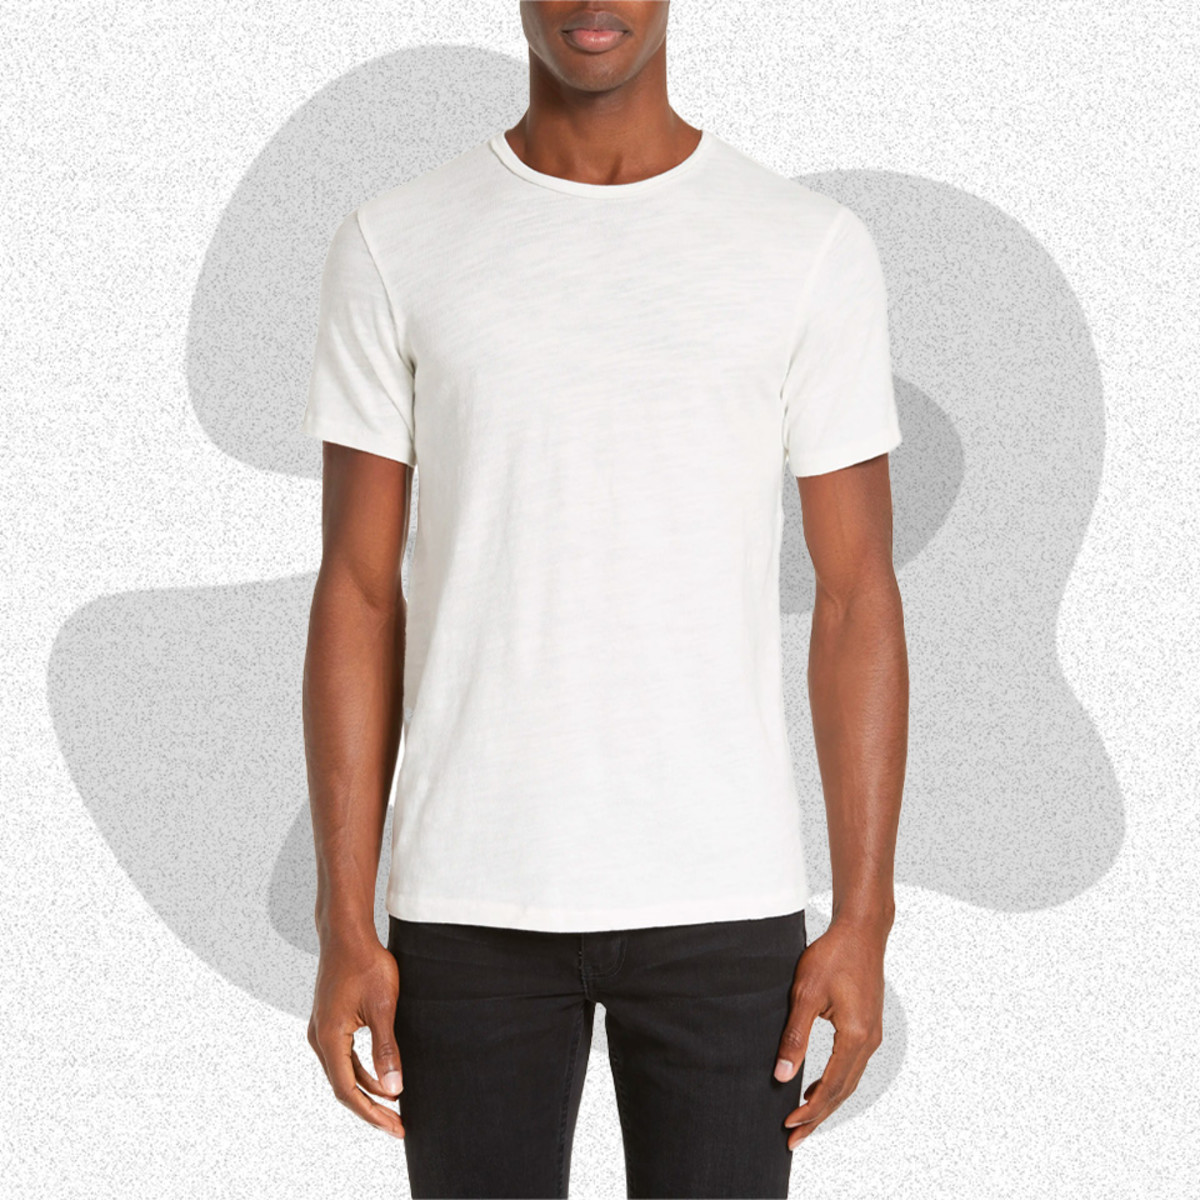 Slim Fit Pima cotton T-shirt - White - Men